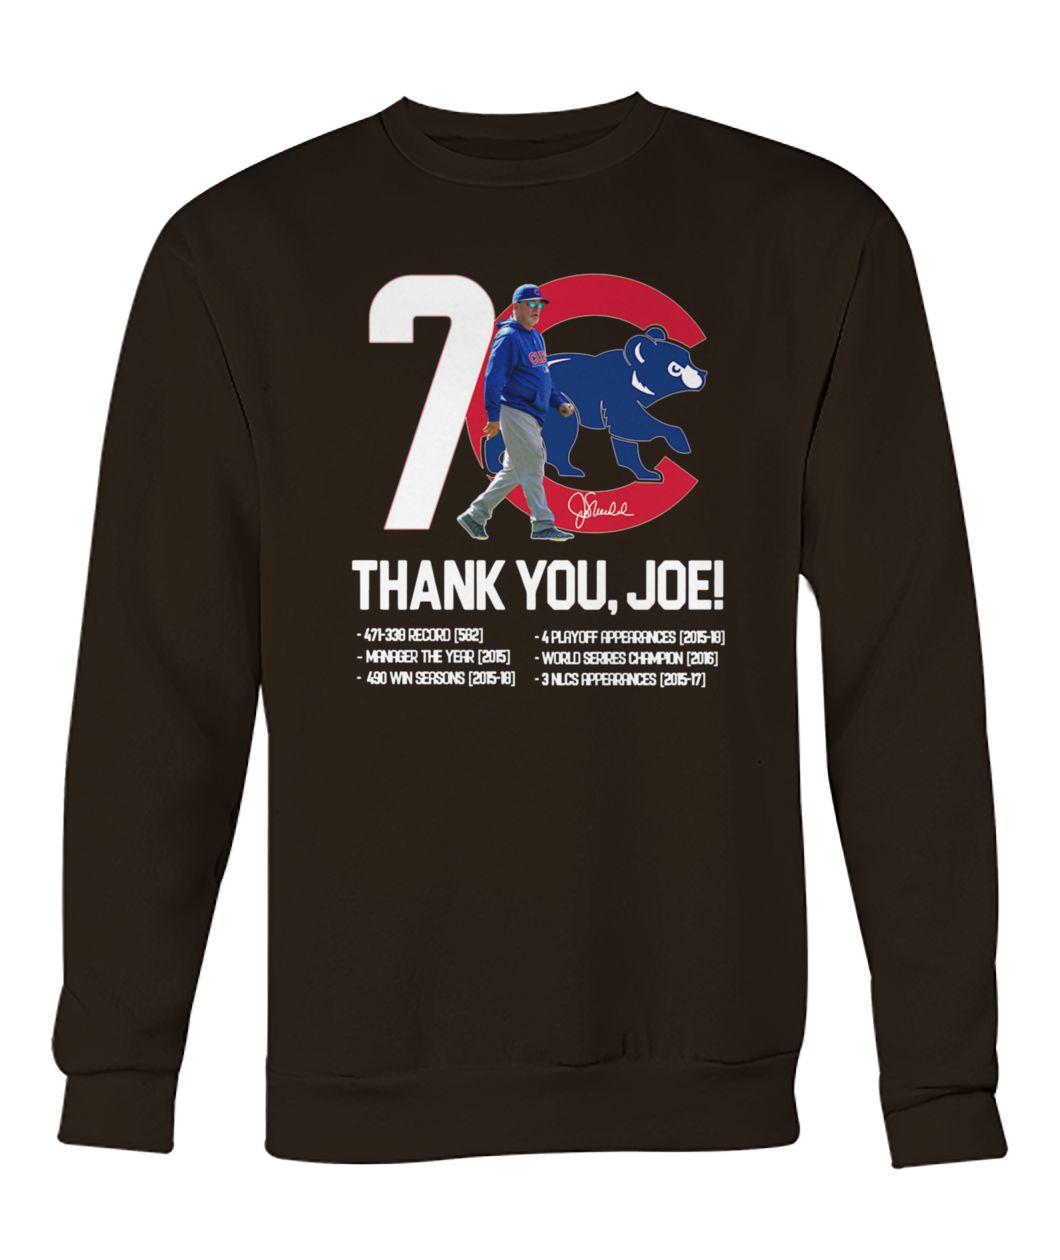 7 chicago cub thank you joe all awards signature sweatshirt